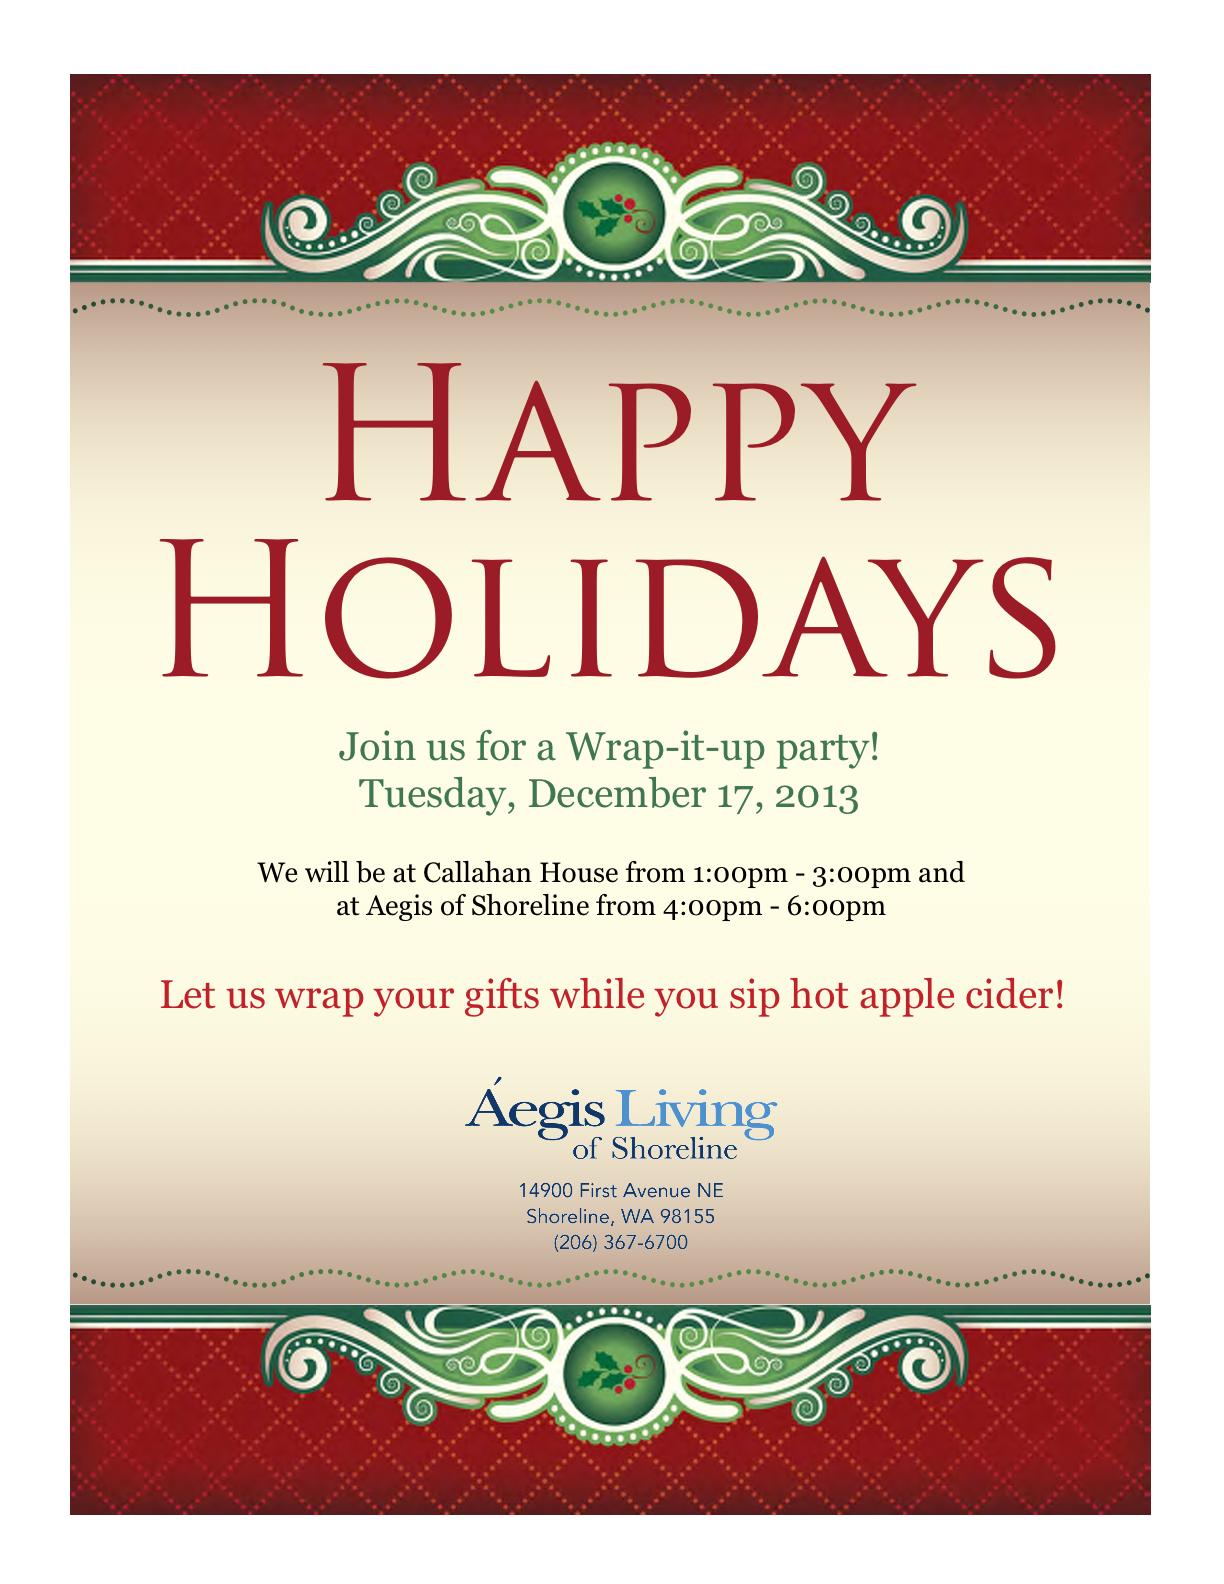 Shoreline Area News: Wrapping party at Aegis of Shoreline Dec 17